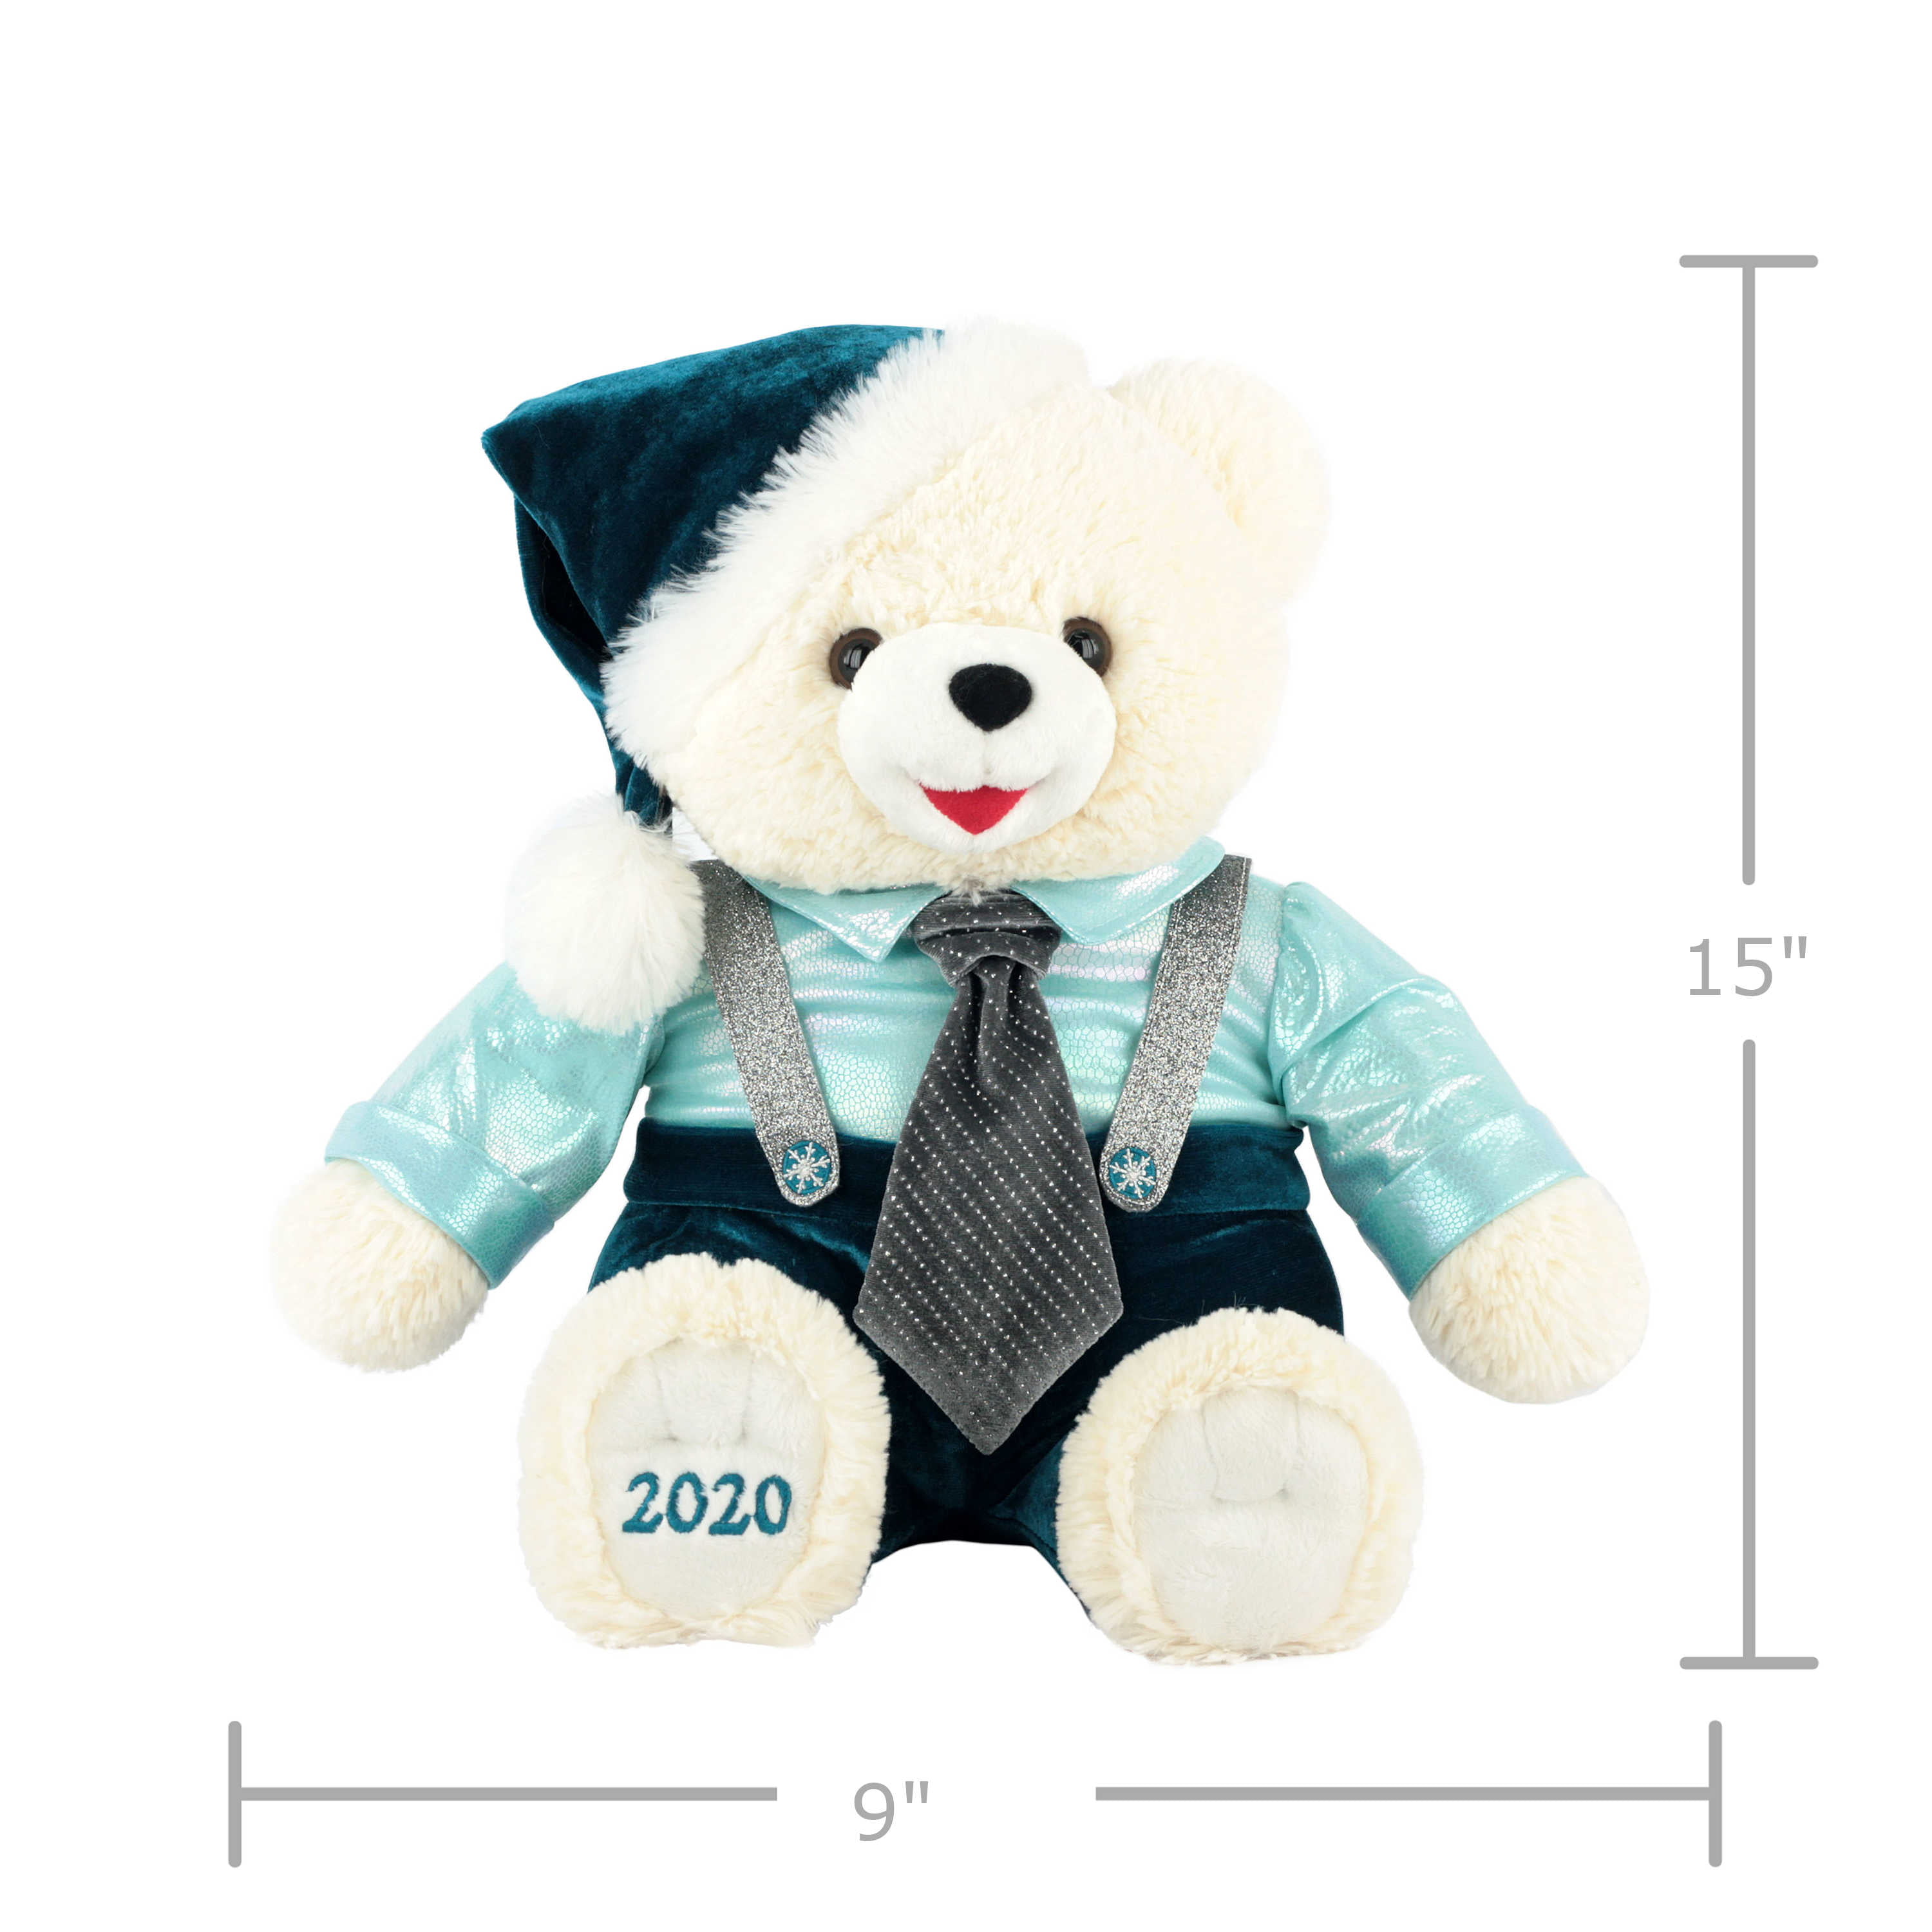 2020 WalMART CHRISTMAS Snowflake TEDDY BEAR White girl 20" blue Outfit Brand NWT 